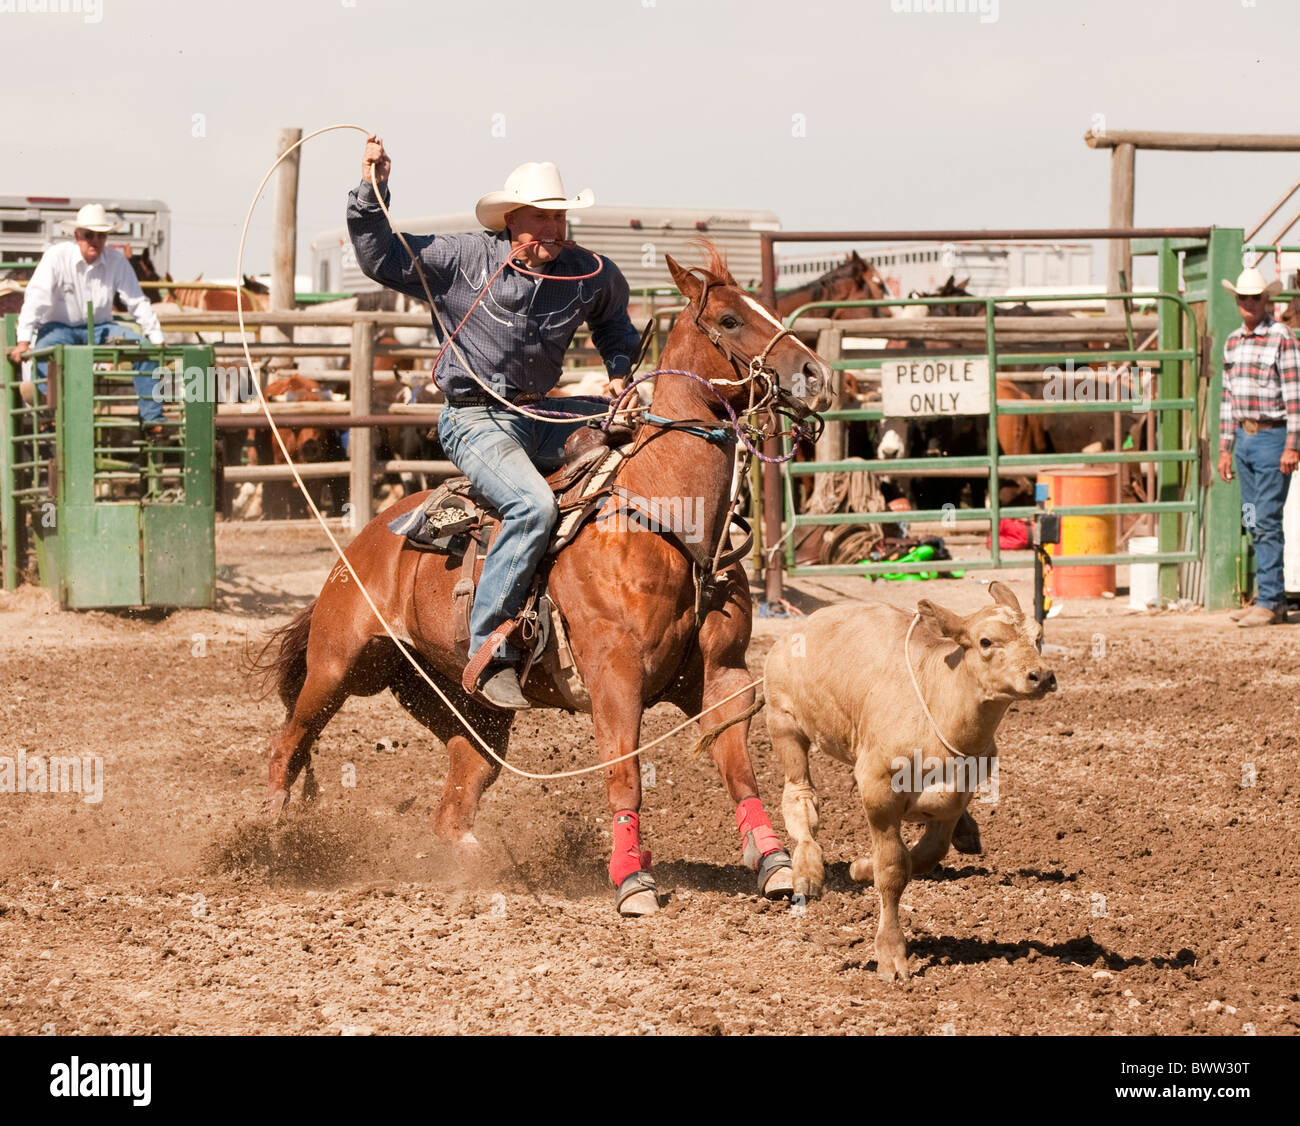 USA, Idaho, Bruneau Rodeo, Calf roper and horse participating in calf